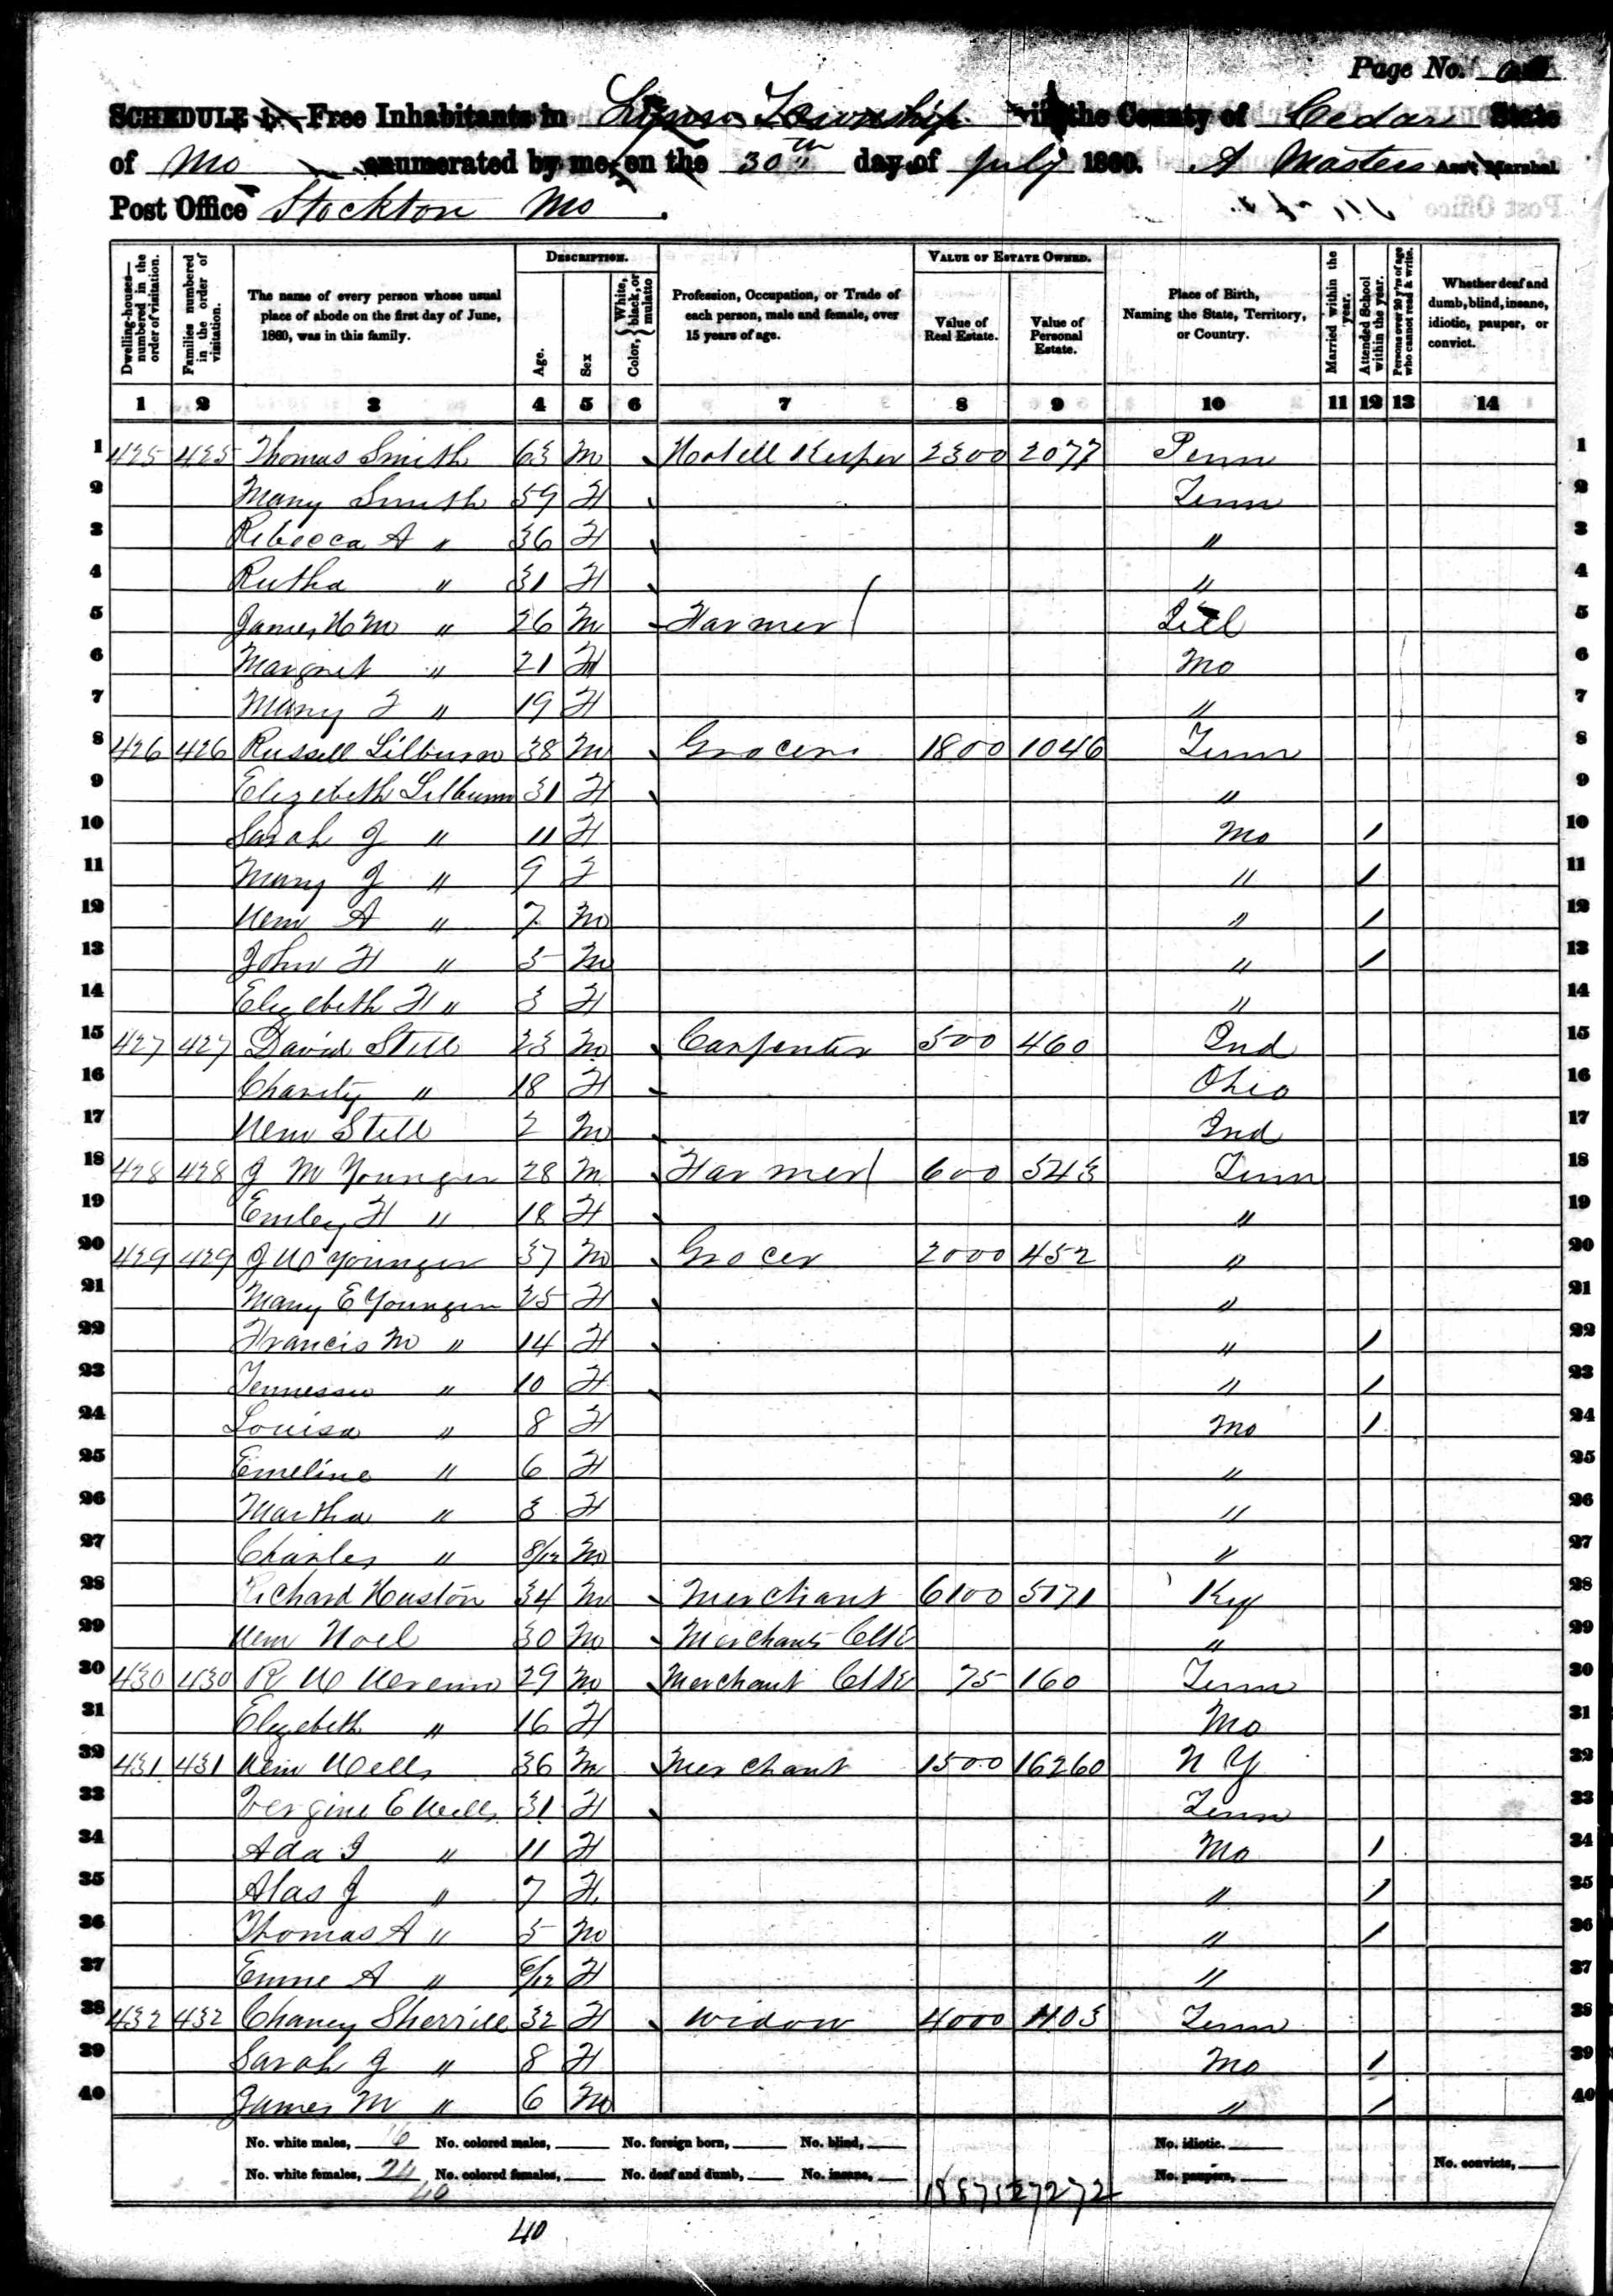 Probably Chaney A. (Hartley) Sherrill, 1860 Cedar County, Missouri, census; widowed.